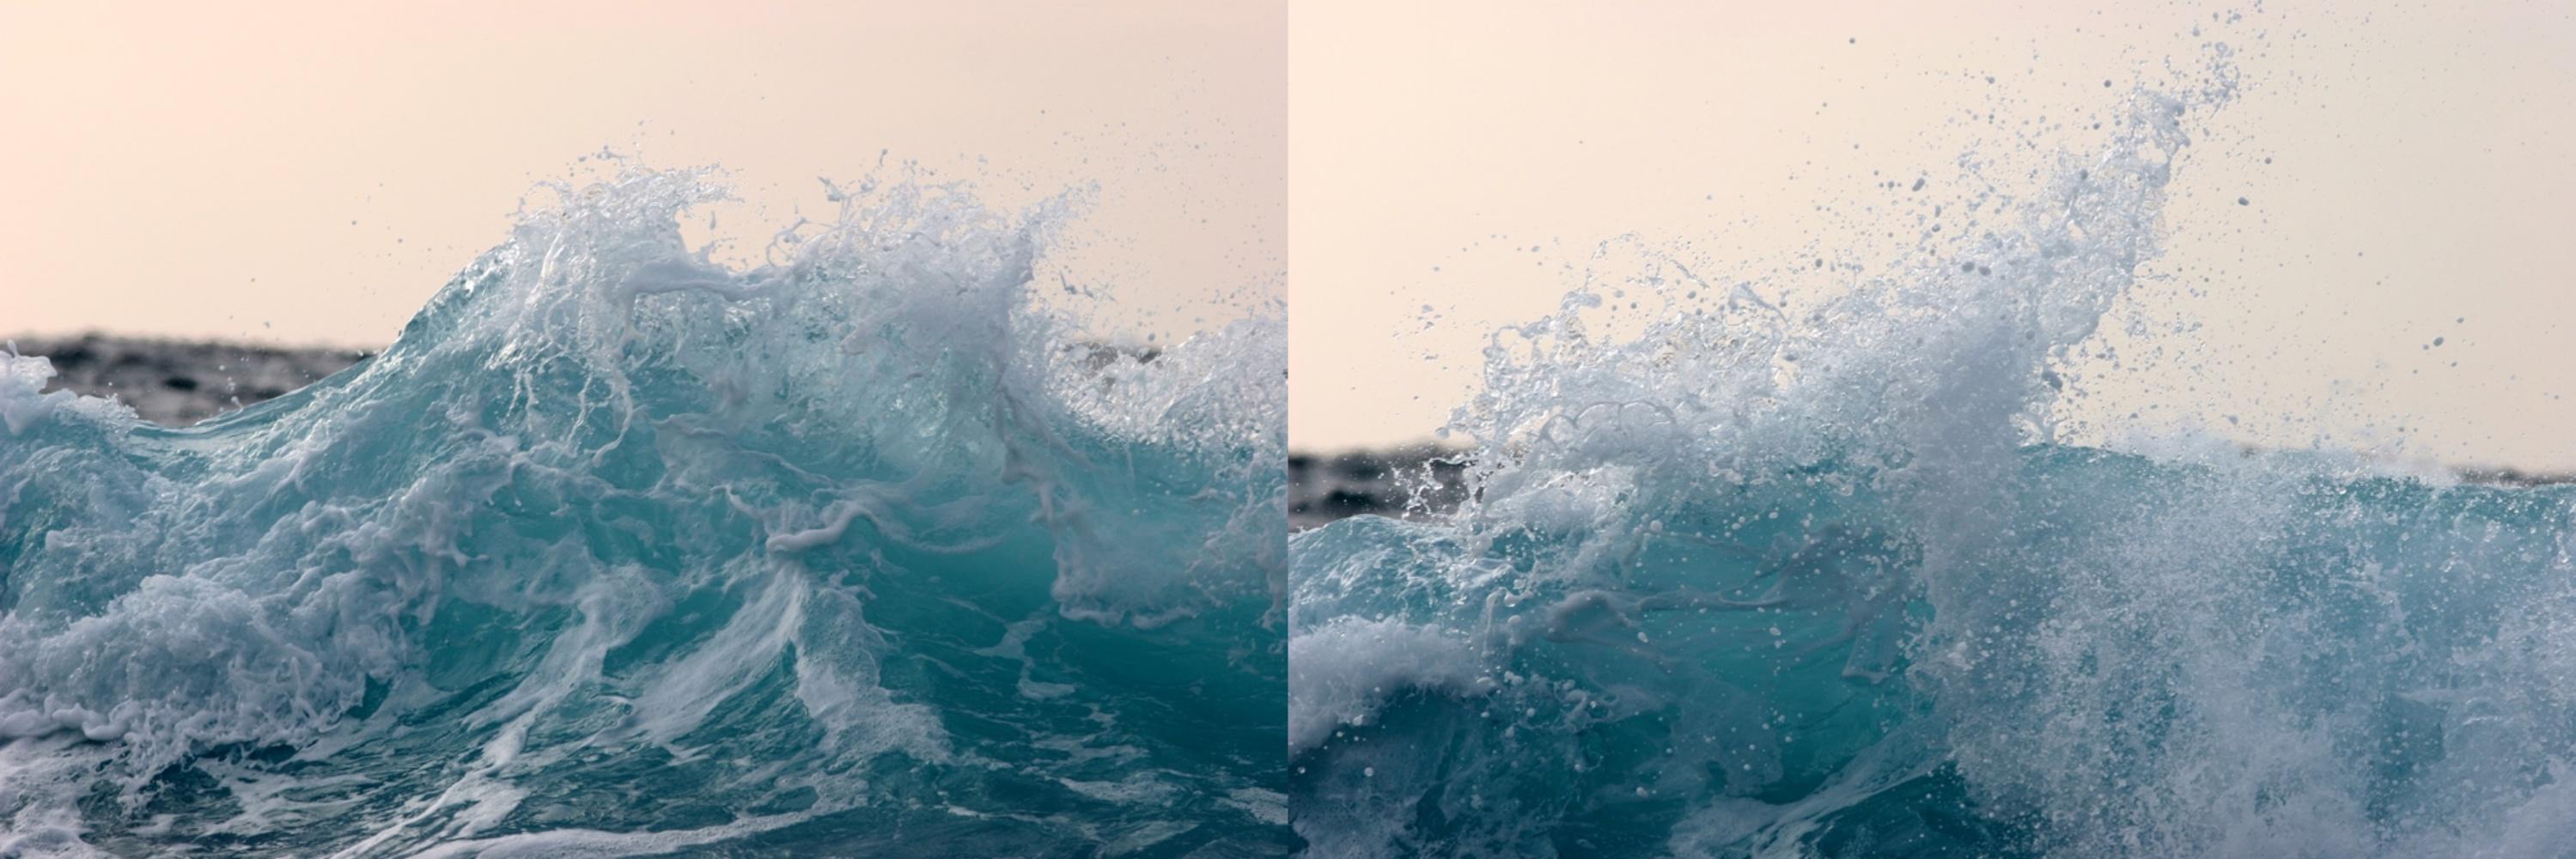 NAMI_060-061 – Syoin Kajii, Japanese Photography, Ocean, Waves, Water, Nature